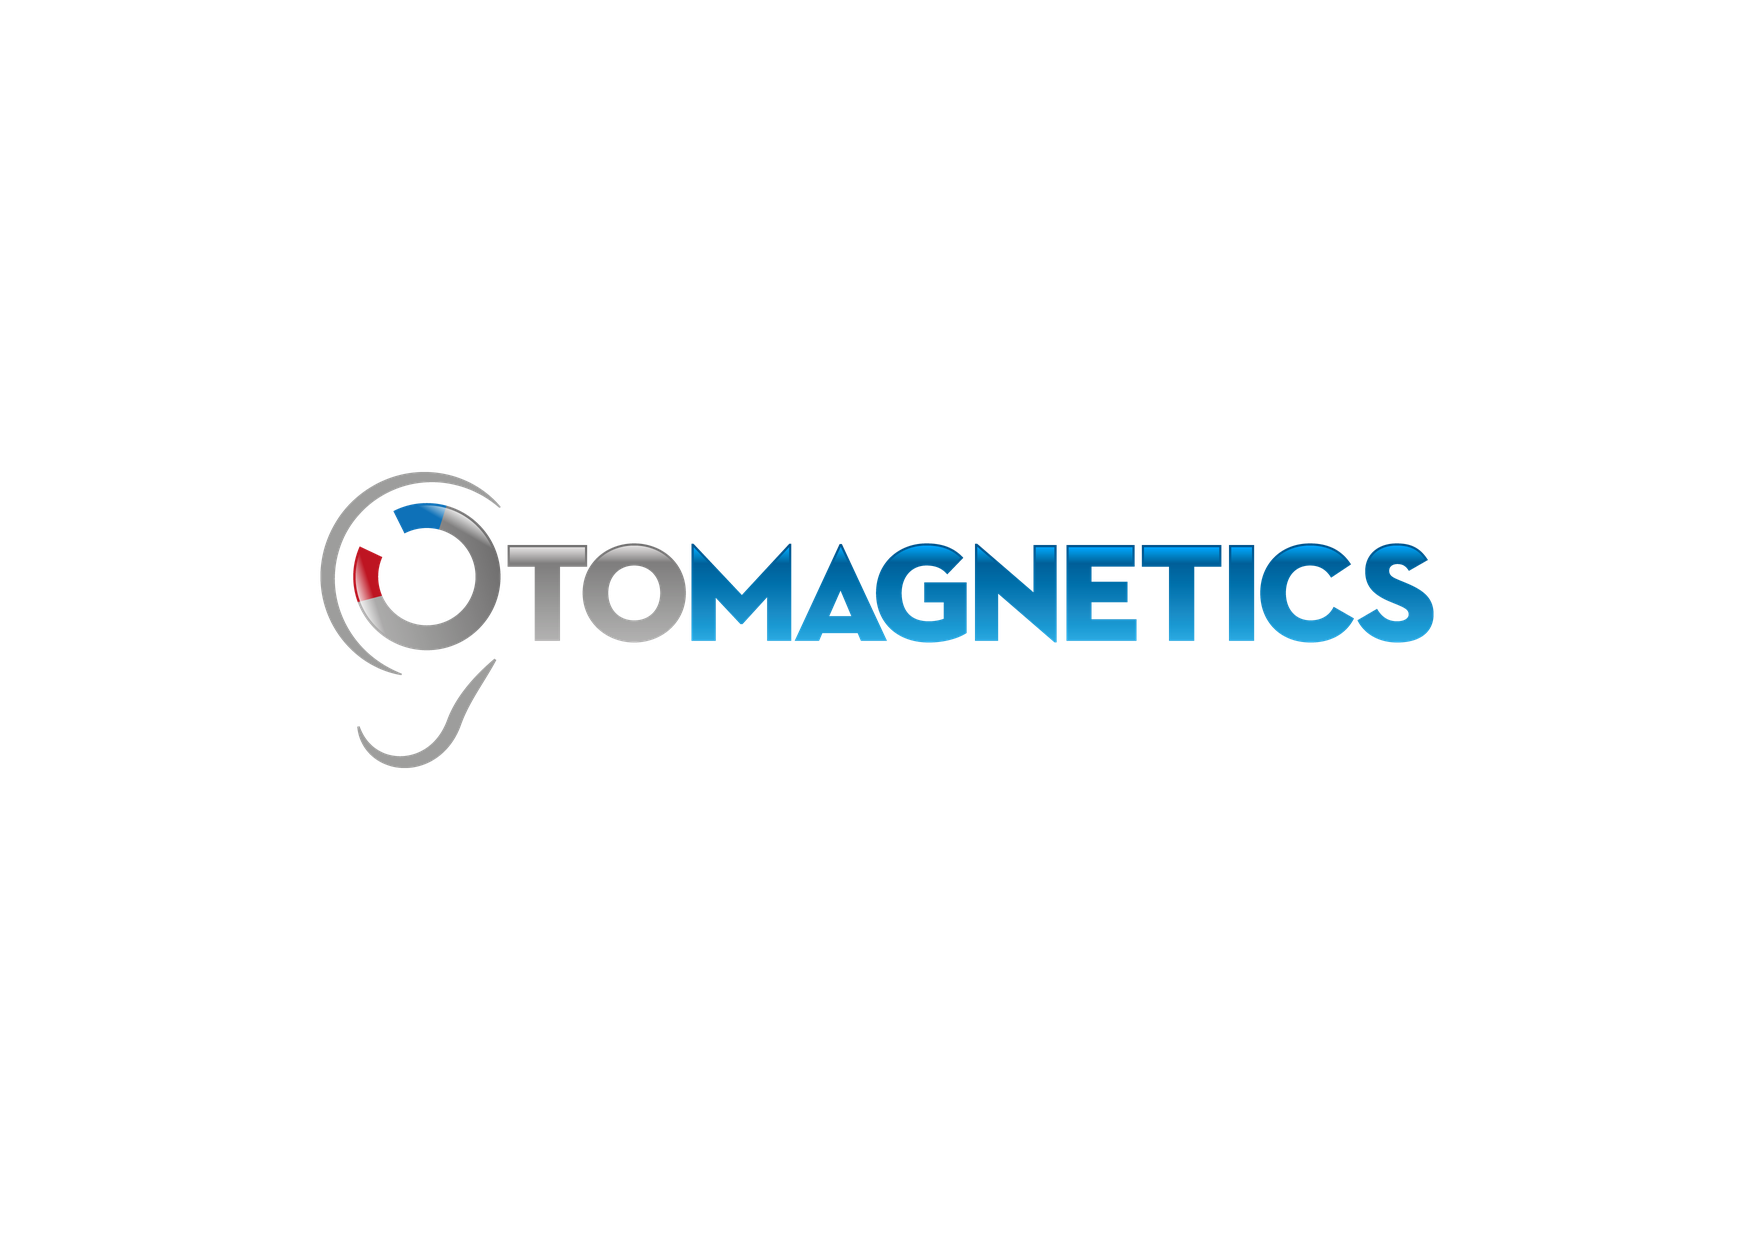 Otomagnetics, Inc.